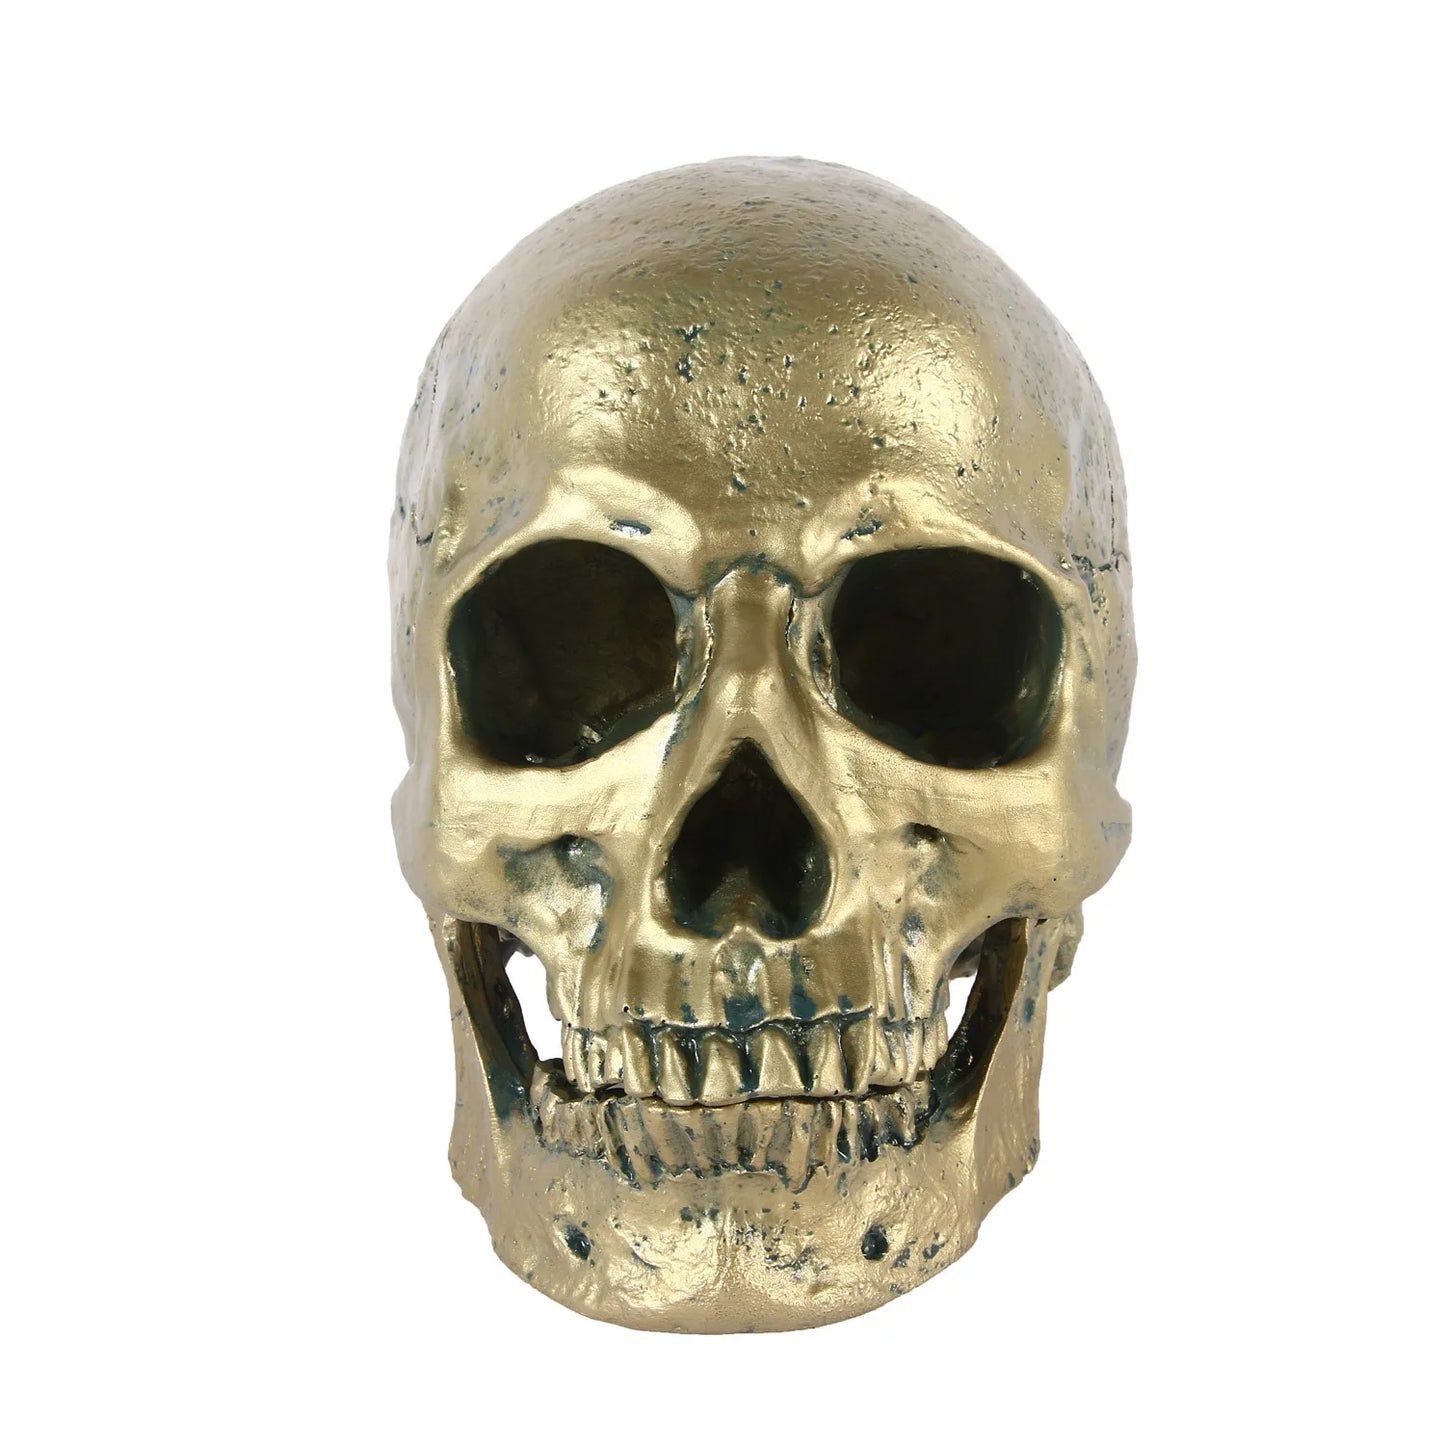 Réplique de crâne humain, modèle de crâne en résine, décoration de crâne, décoration de salle de maison, Sculpture de crâne, Figurine d'halloween